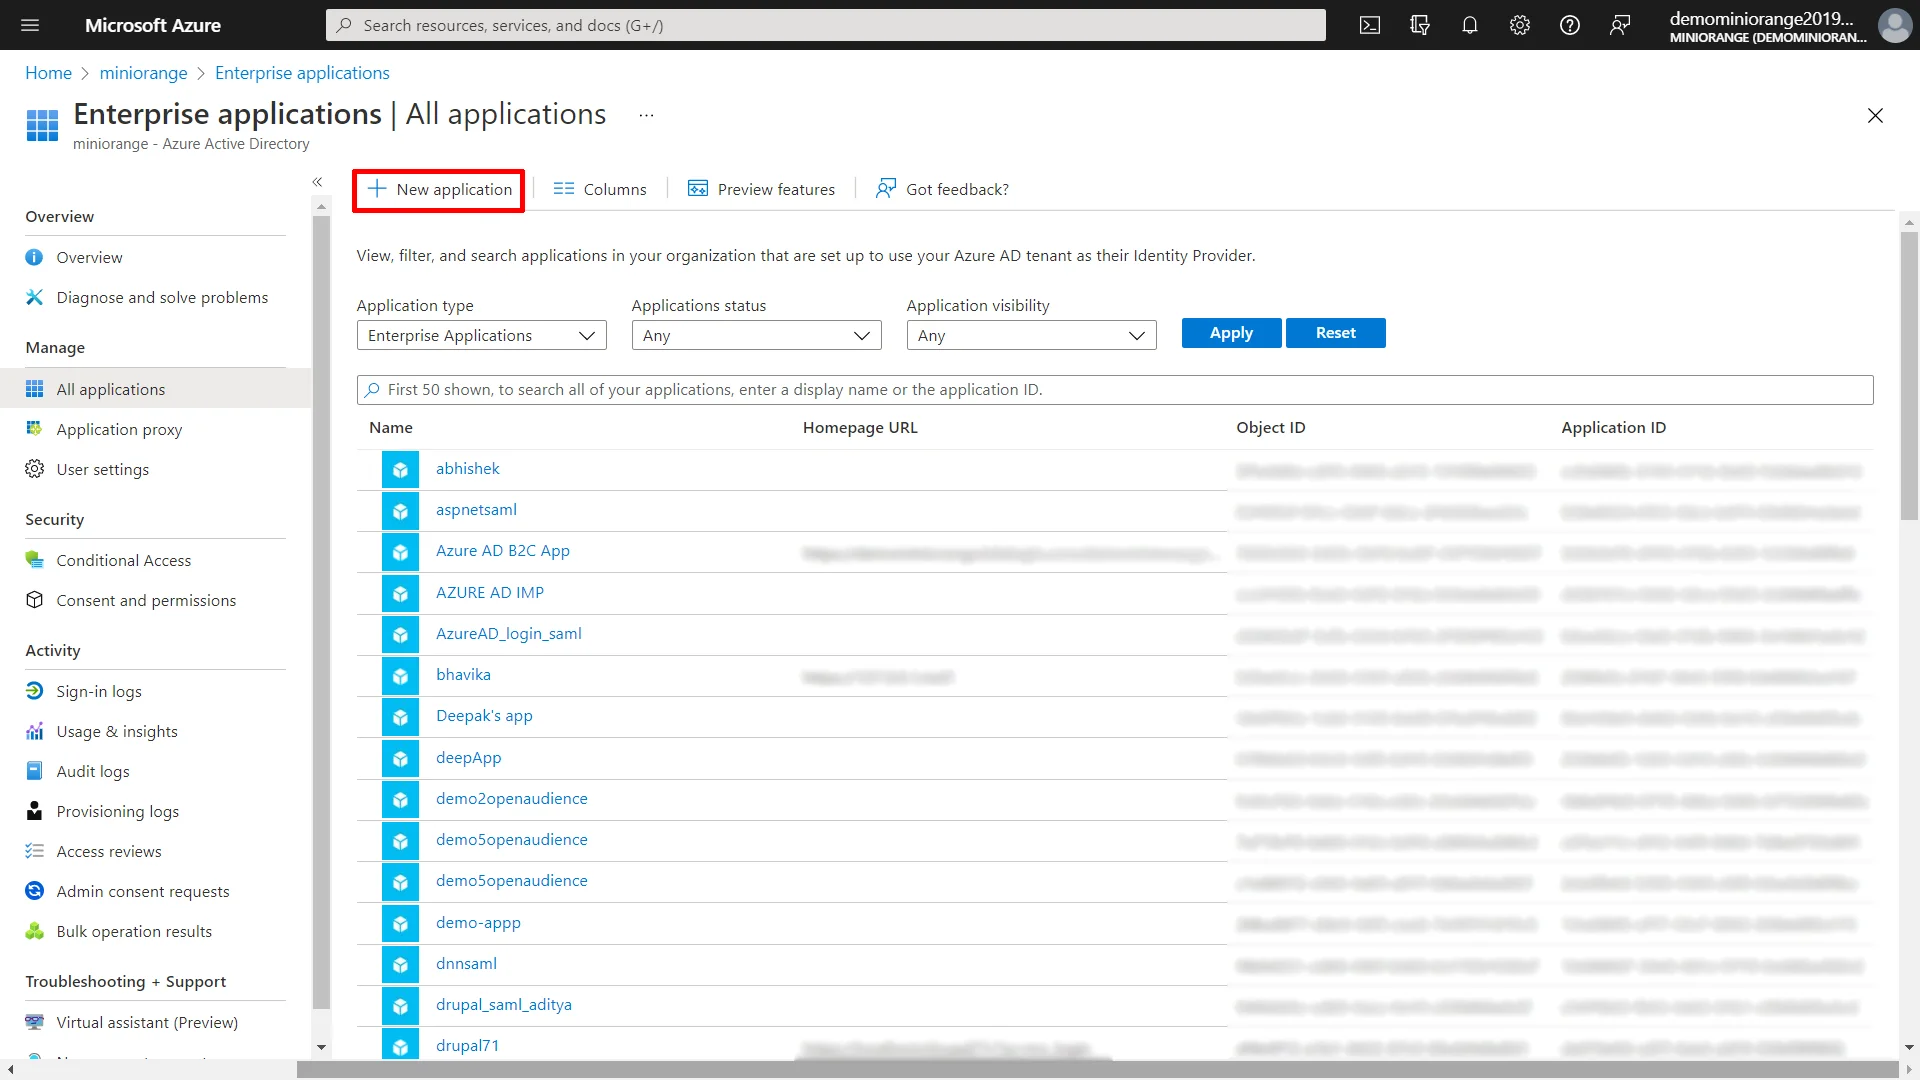 ASP.NET SAML Single Sign-On (SSO) using Azure AD (Microsoft Entra ID) as IDP - non-gallery app